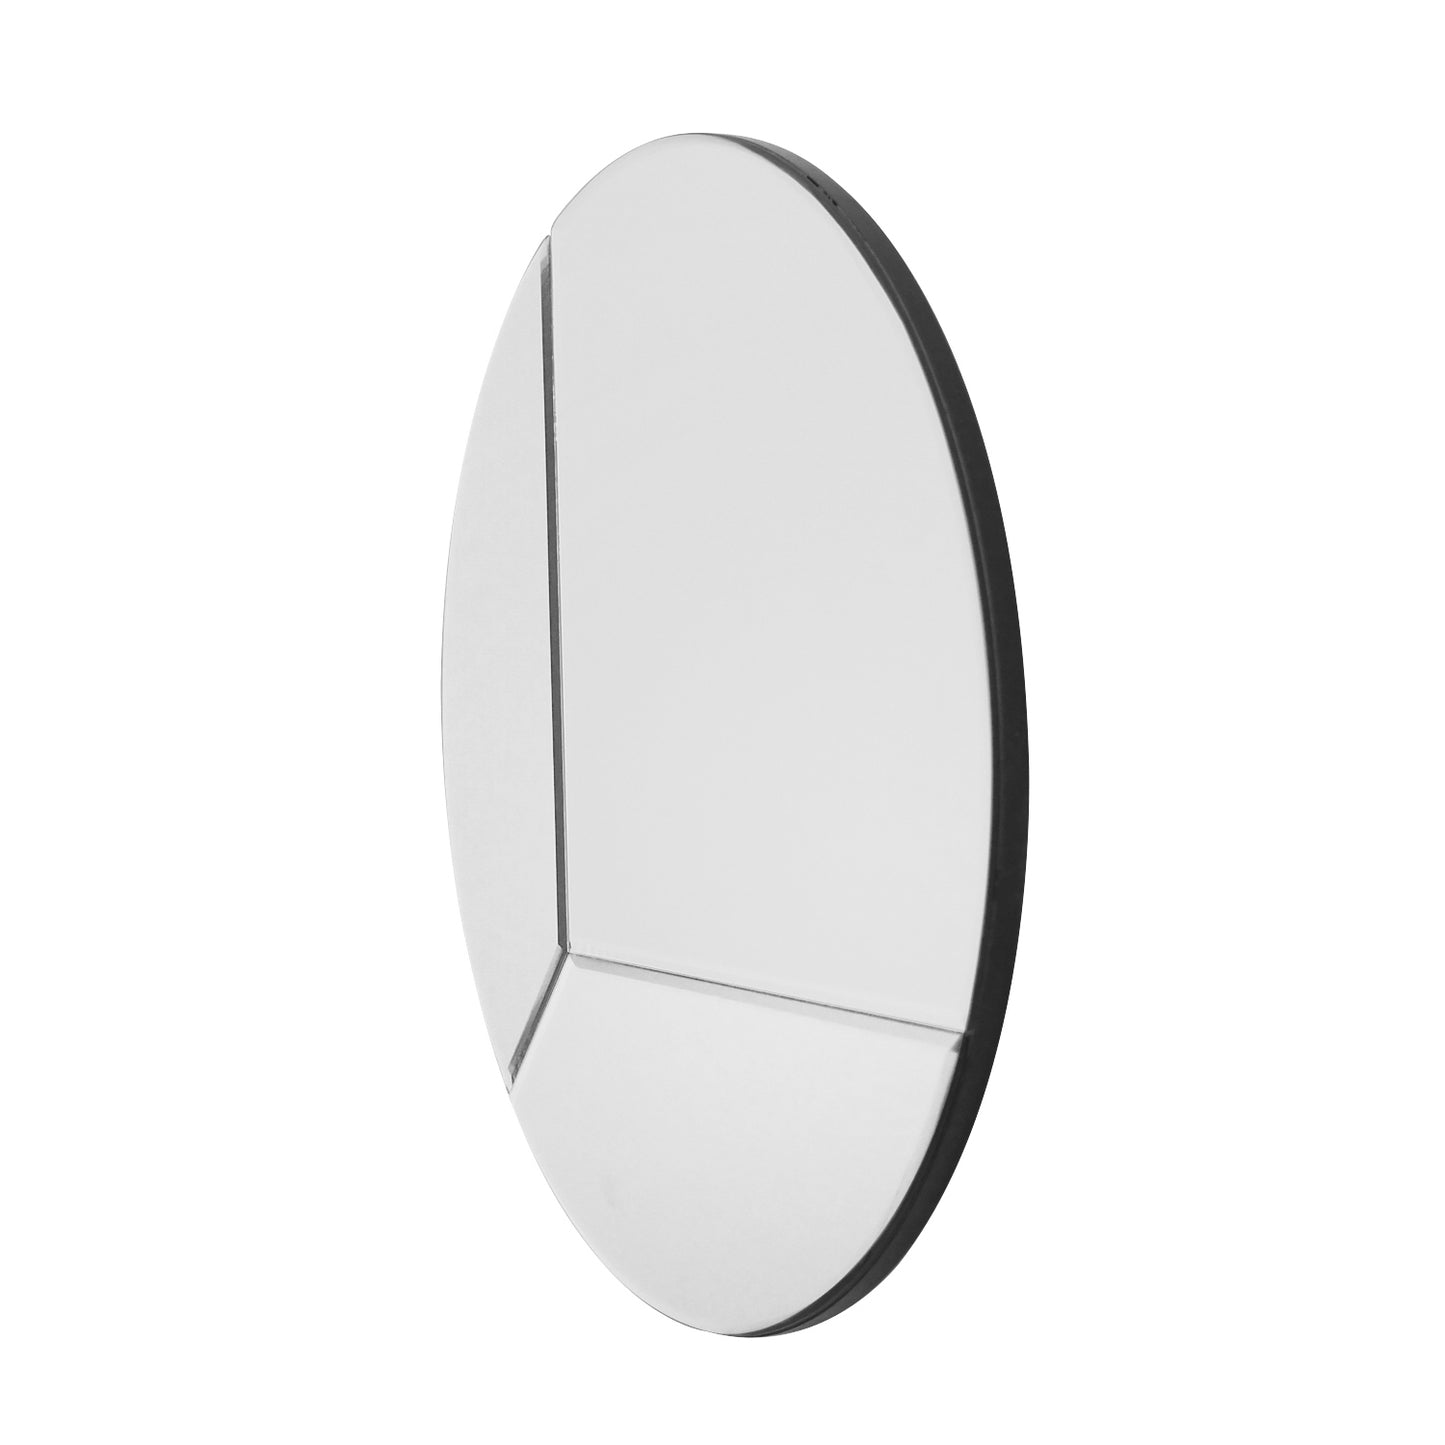 Reversible Round XL - Mirror - Reversible - 22 inches - Beveled Mirror - Reflective Artwork